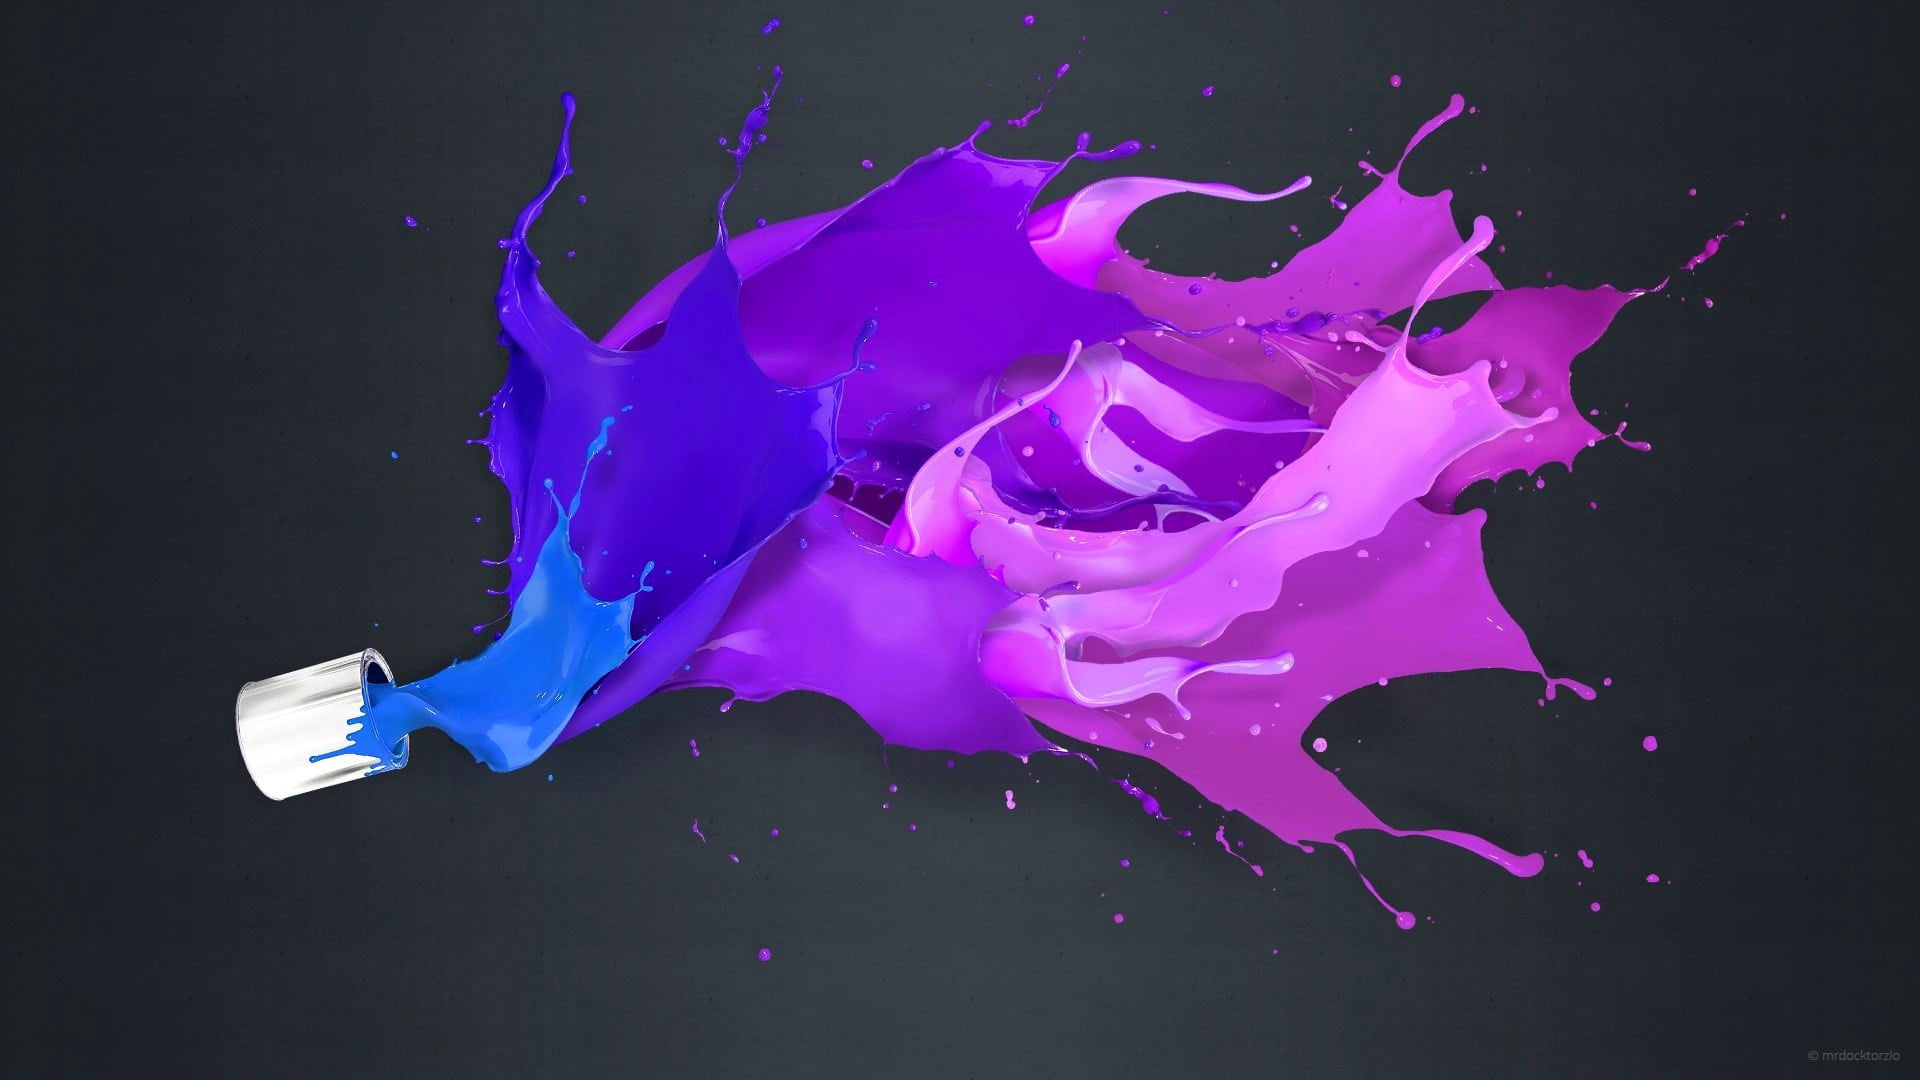 Pink and purple wallpaper paint splatter illustration, painting, liquid